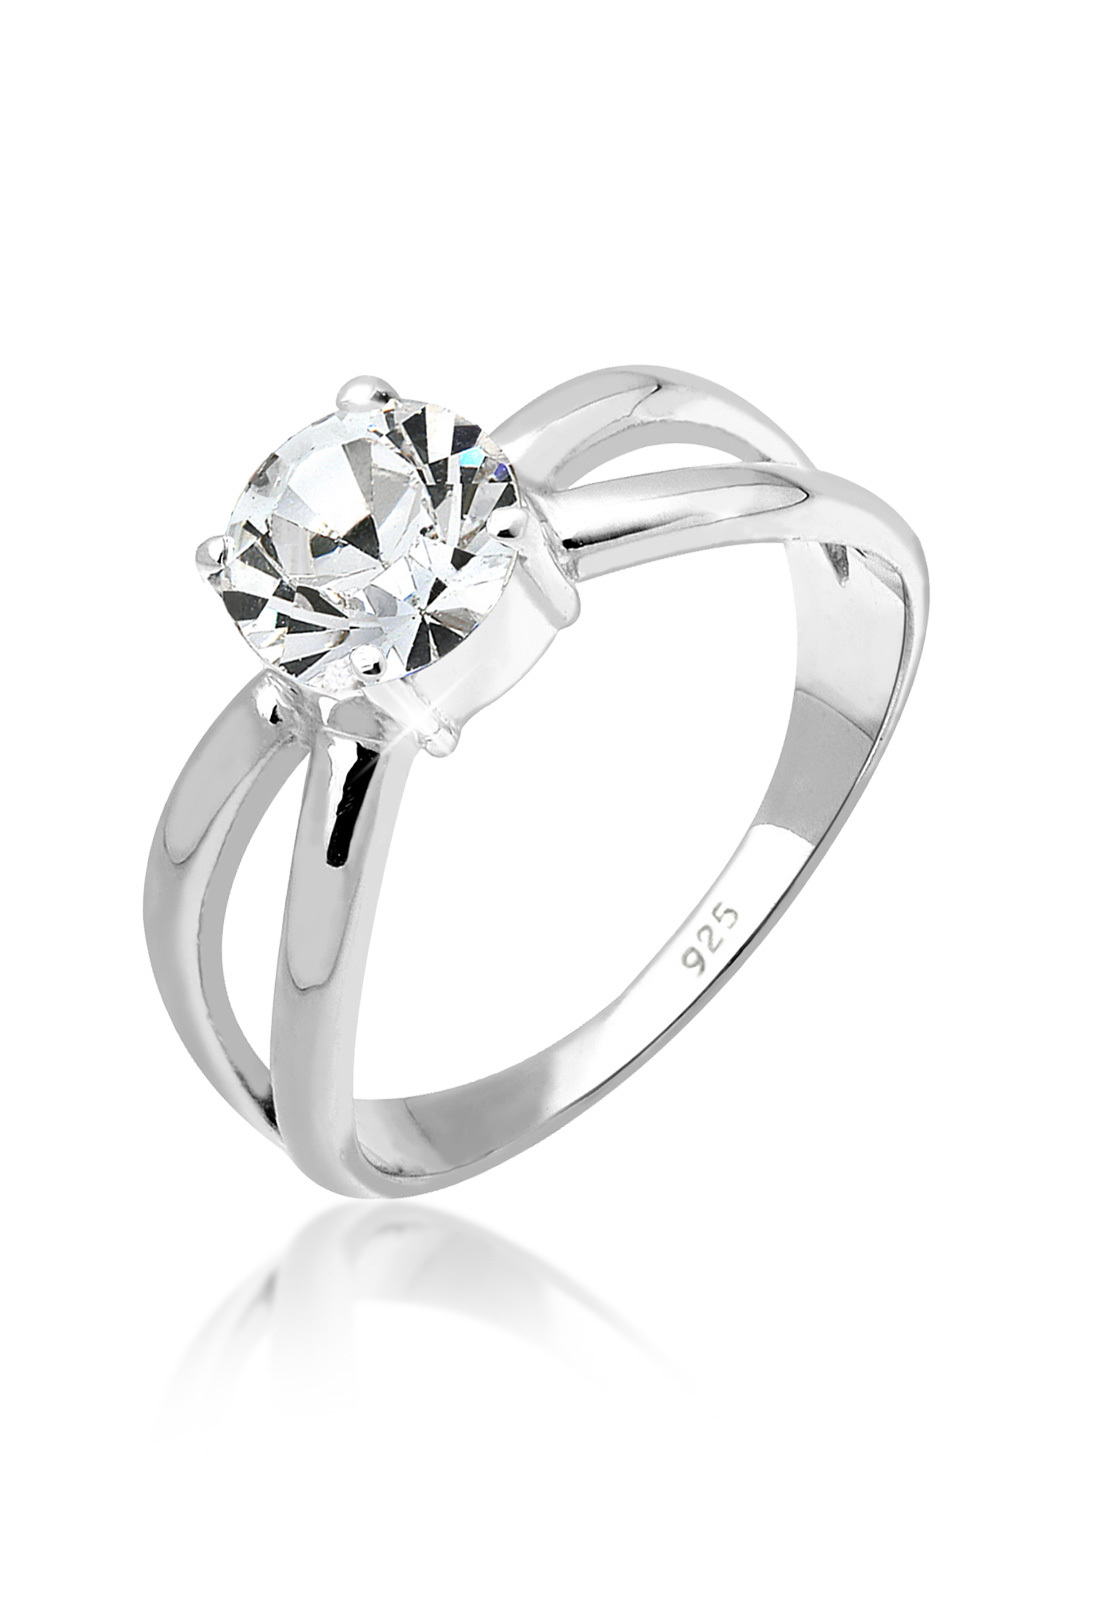 Solitär-Ring | Kristall ( Weiß ) | 925er Sterling Silber